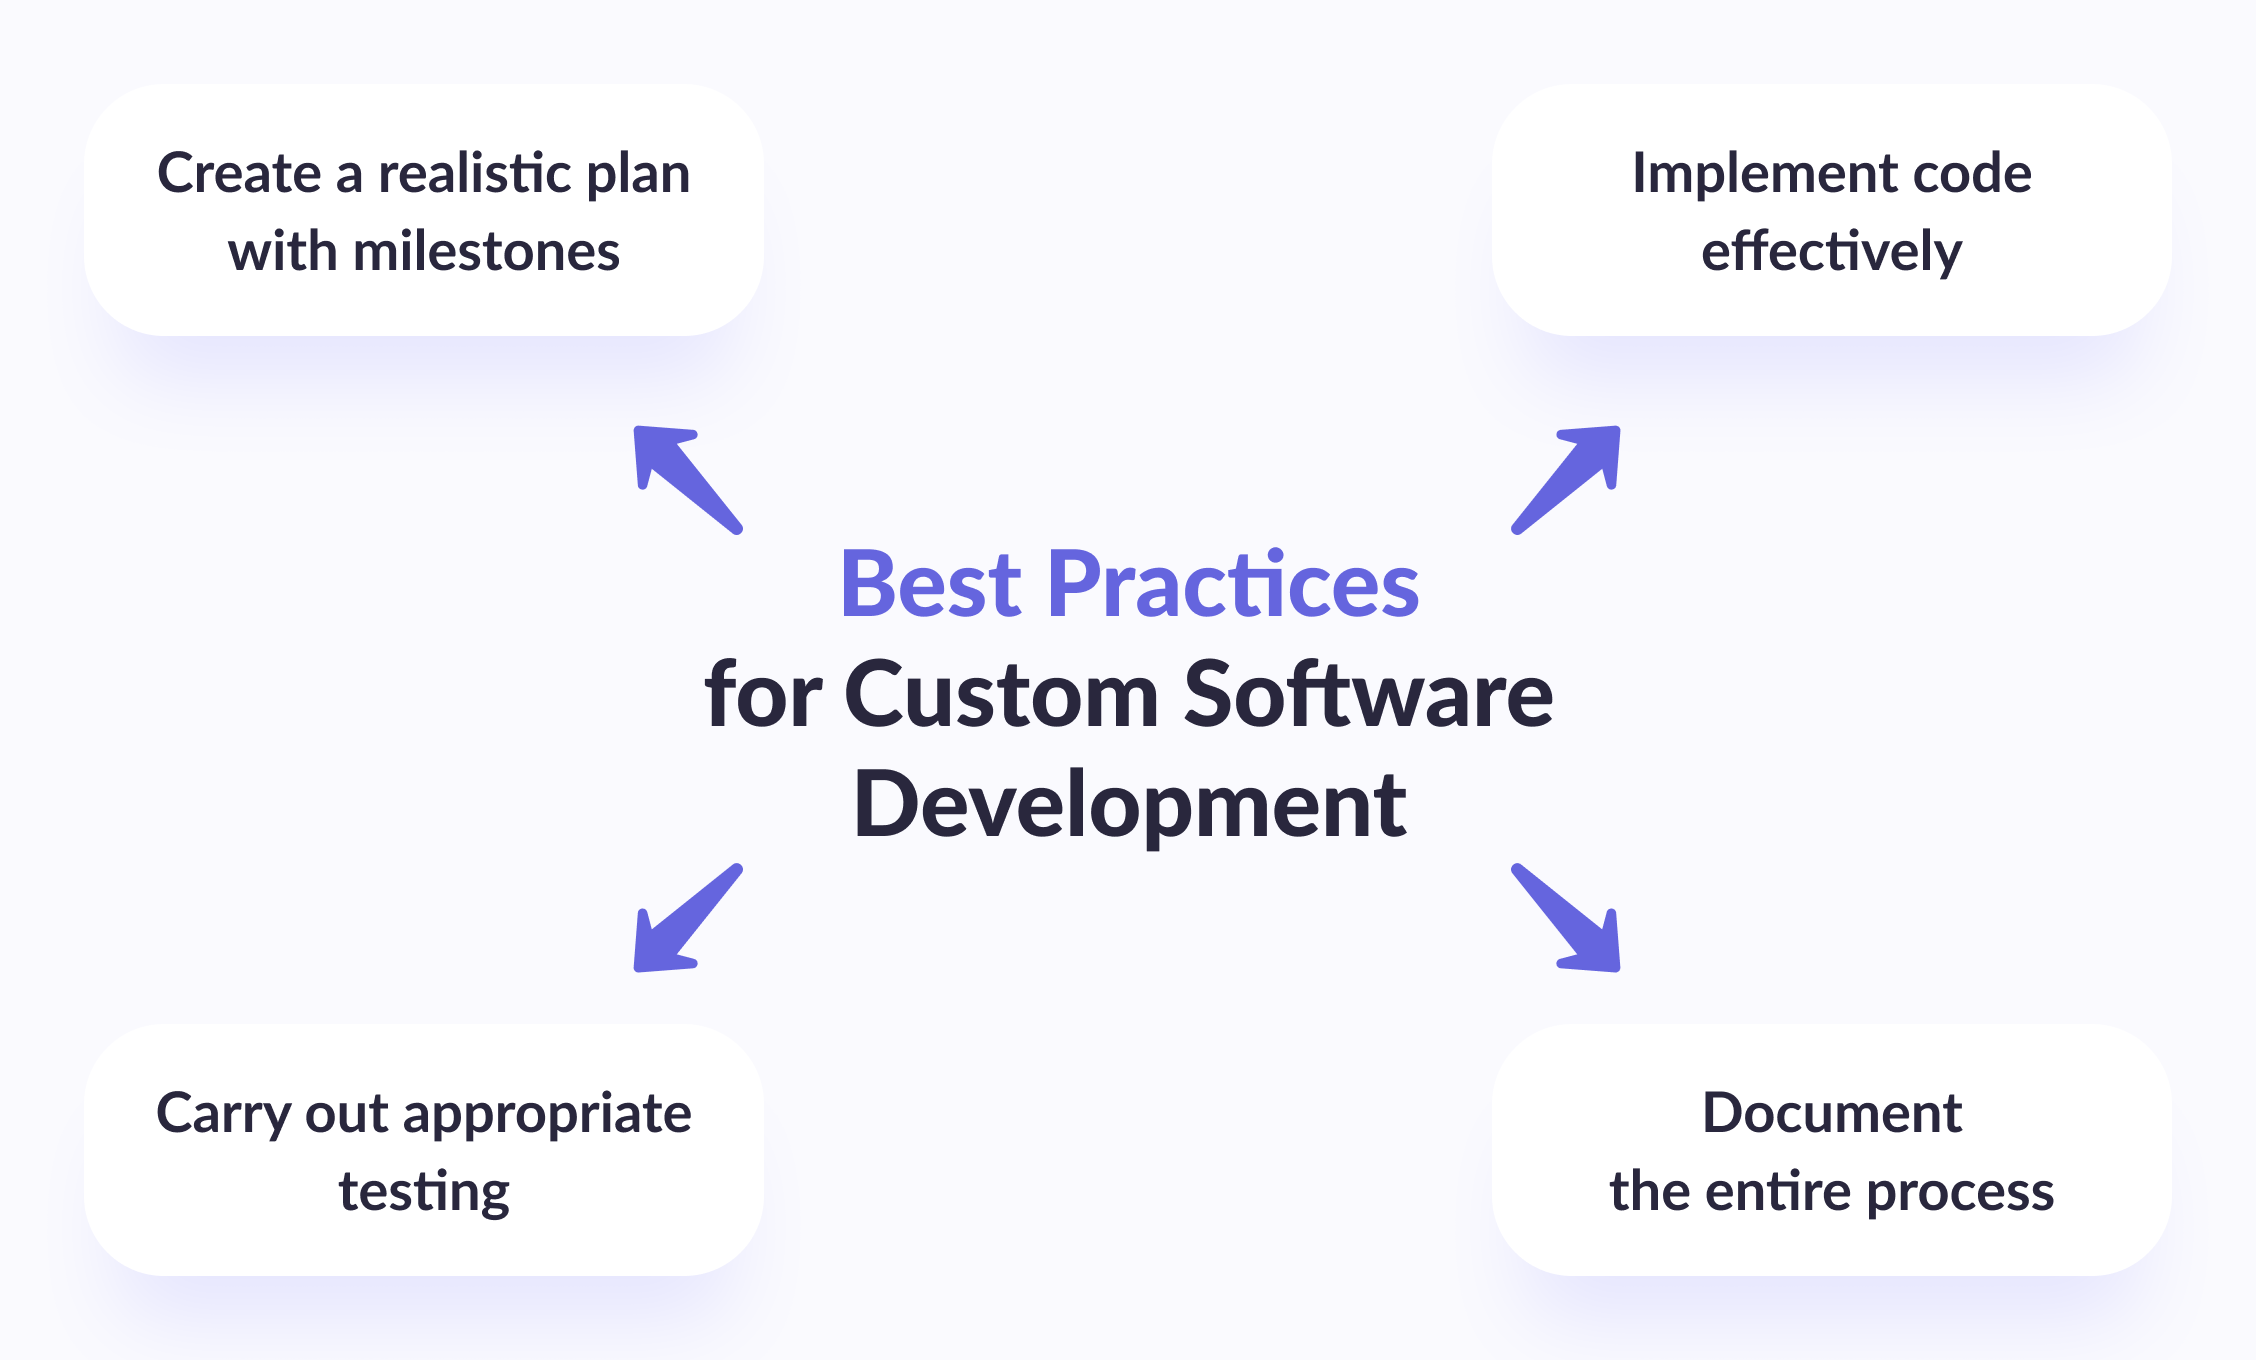 Best practices for custom software development